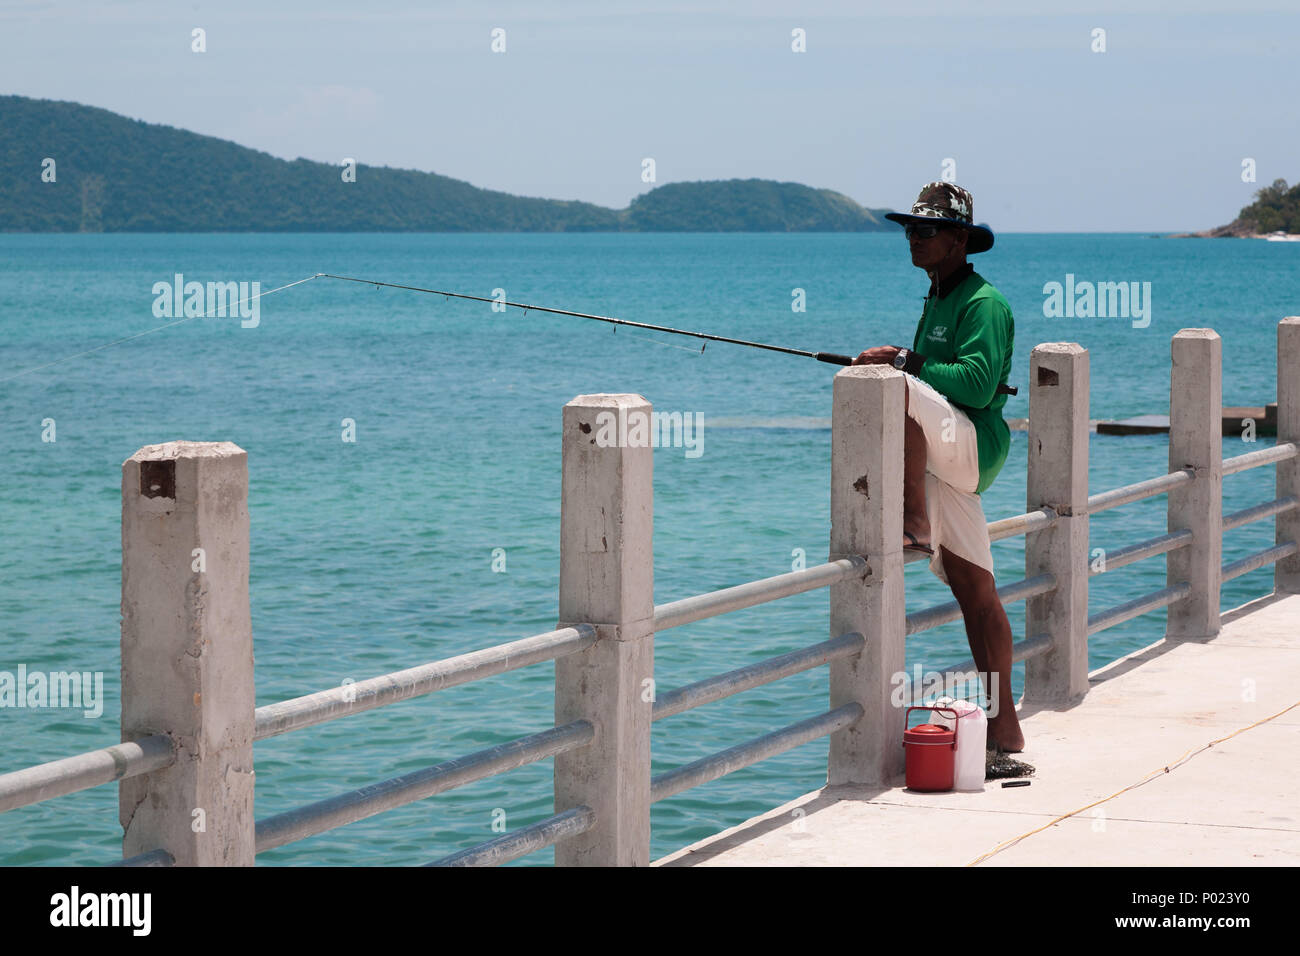 Man fishing in the blue ocean at Krabi Thailand, Asia. Stock Photo